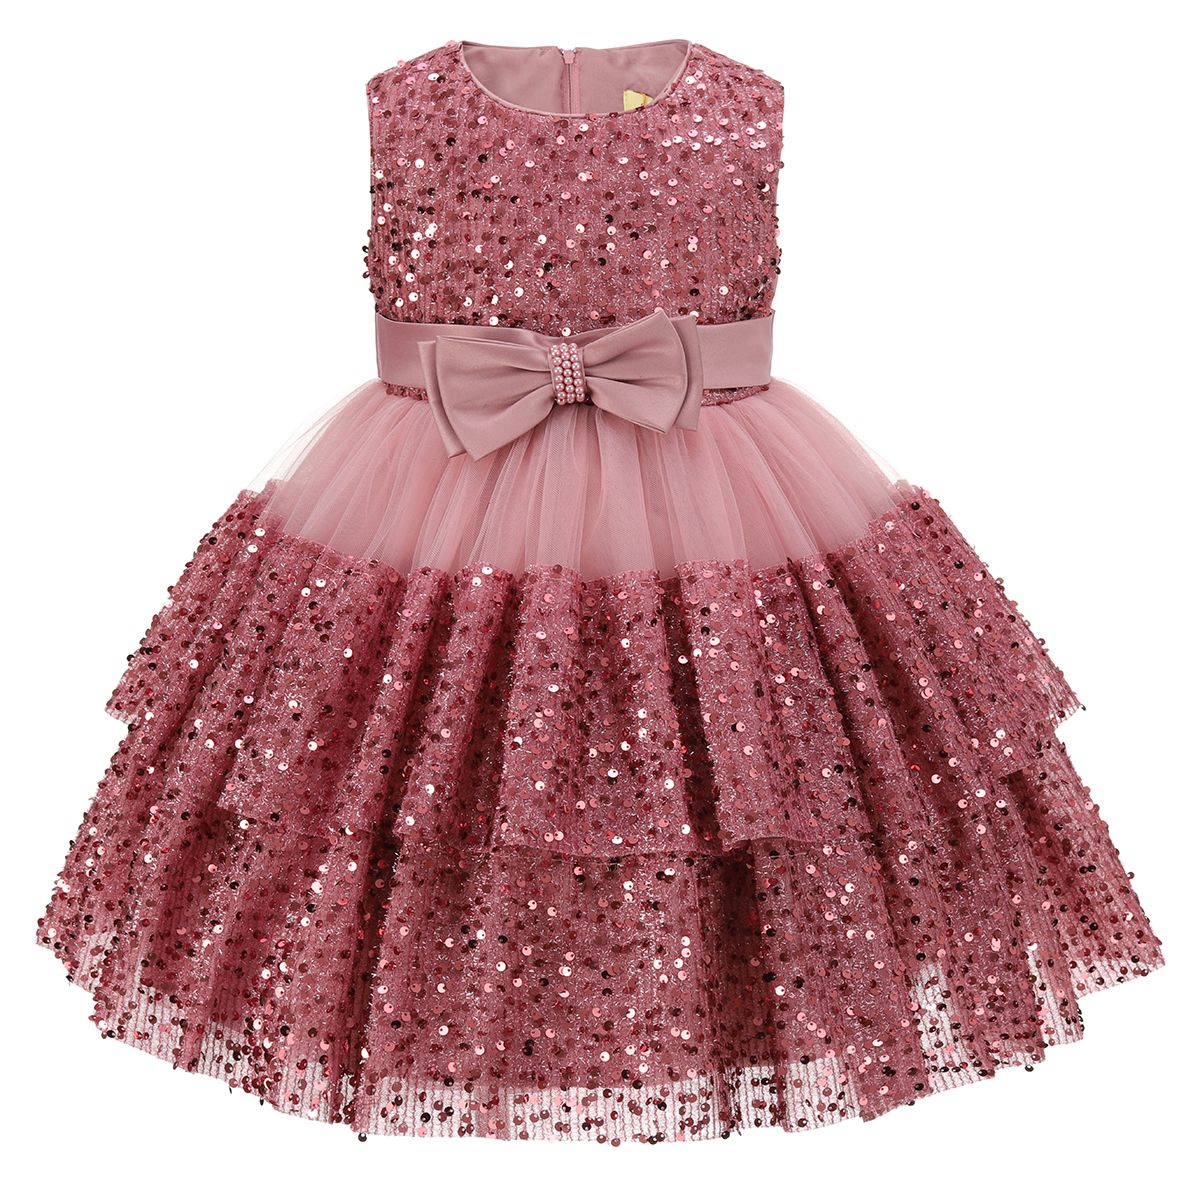 Dusty Pink layered mesh net sleeveless overlay dress